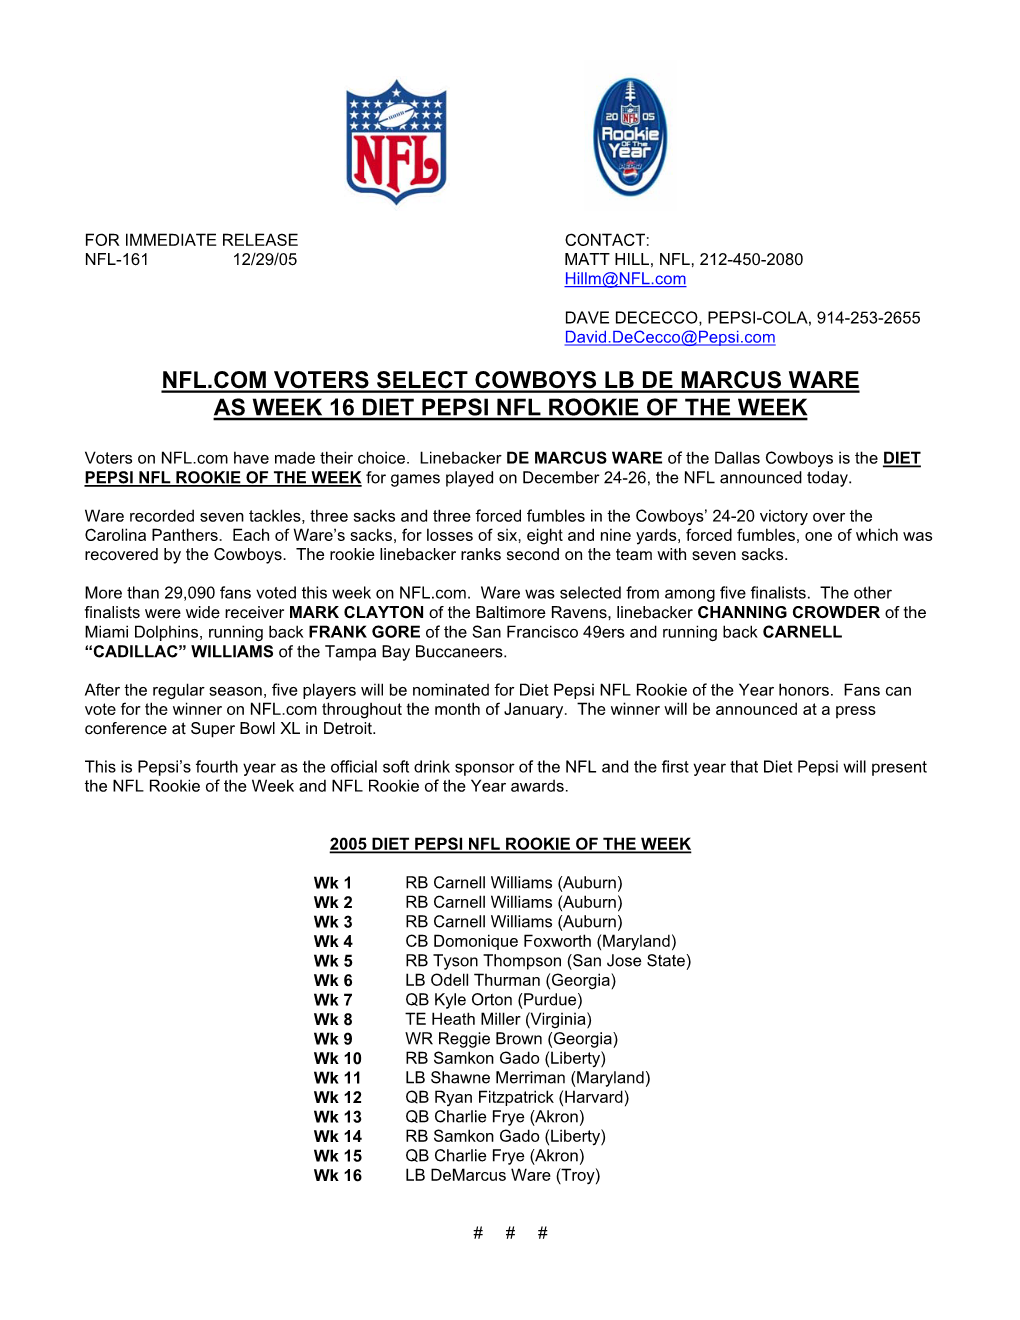 Nfl.Com Voters Select Cowboys Lb De Marcus Ware As Week 16 Diet Pepsi Nfl Rookie of the Week